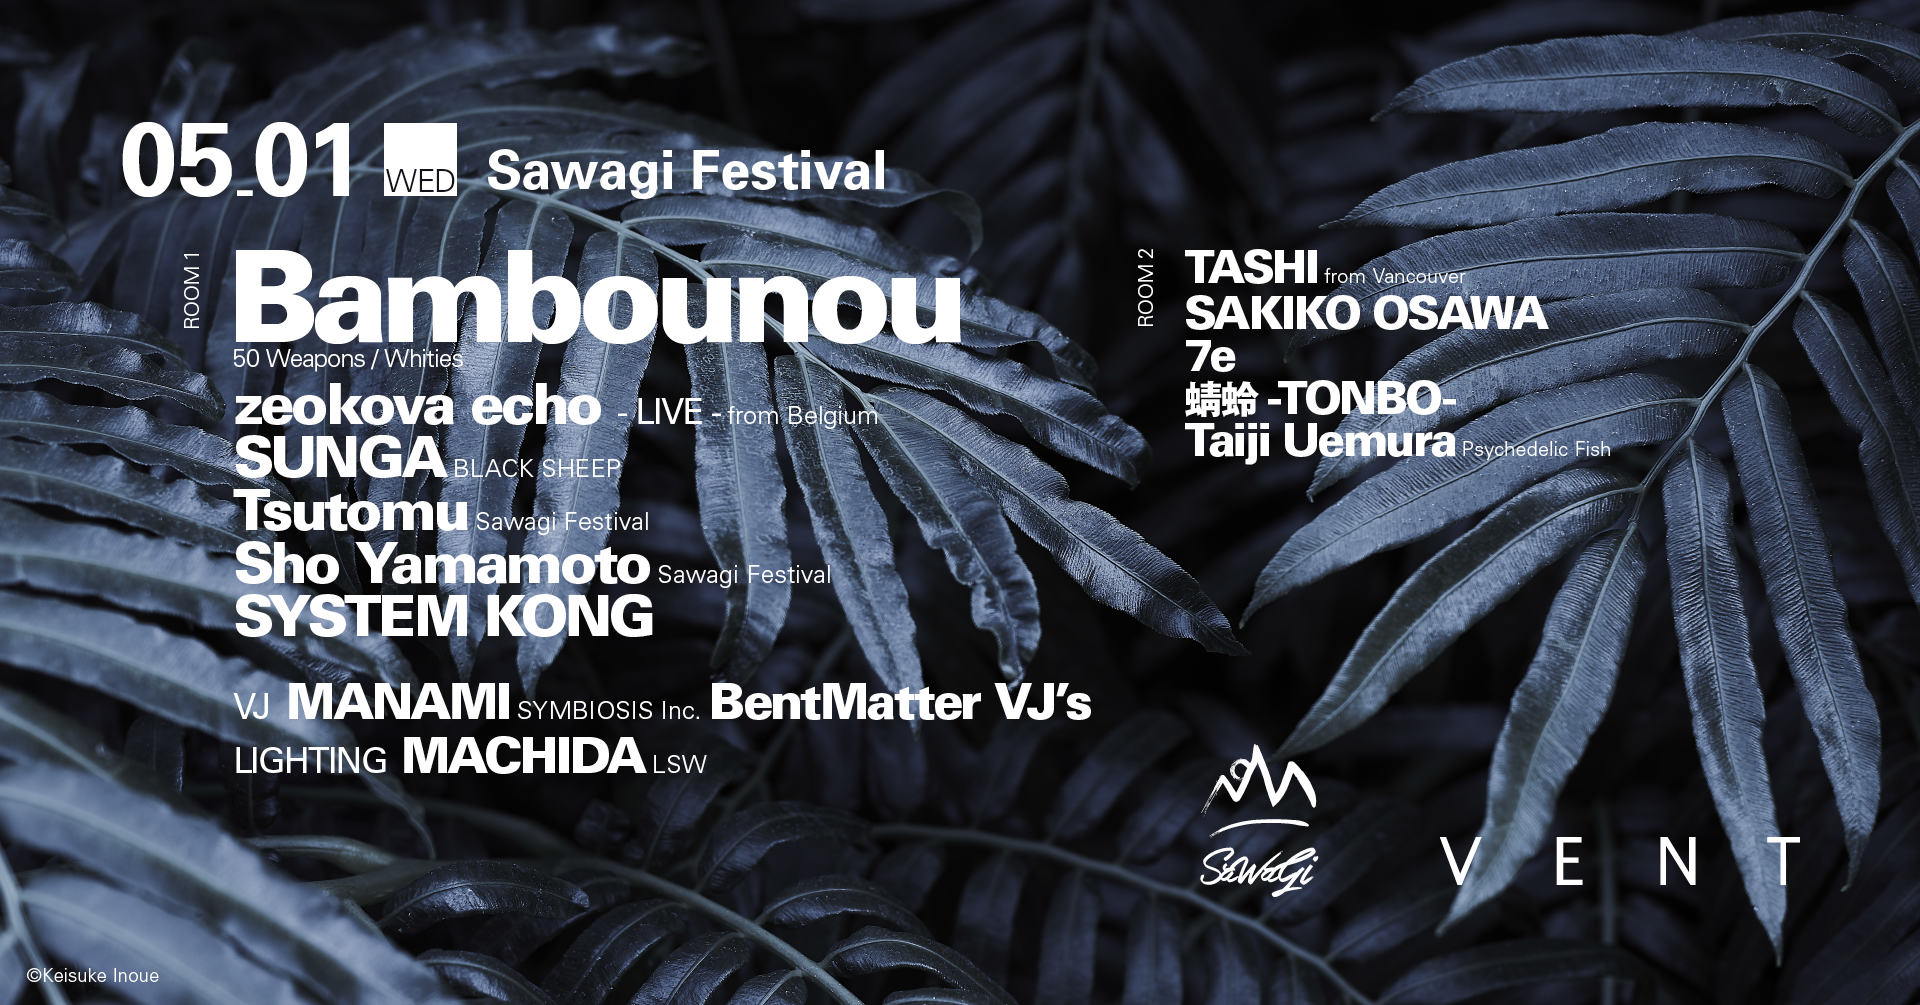 Bambounou at Sawagi Festival